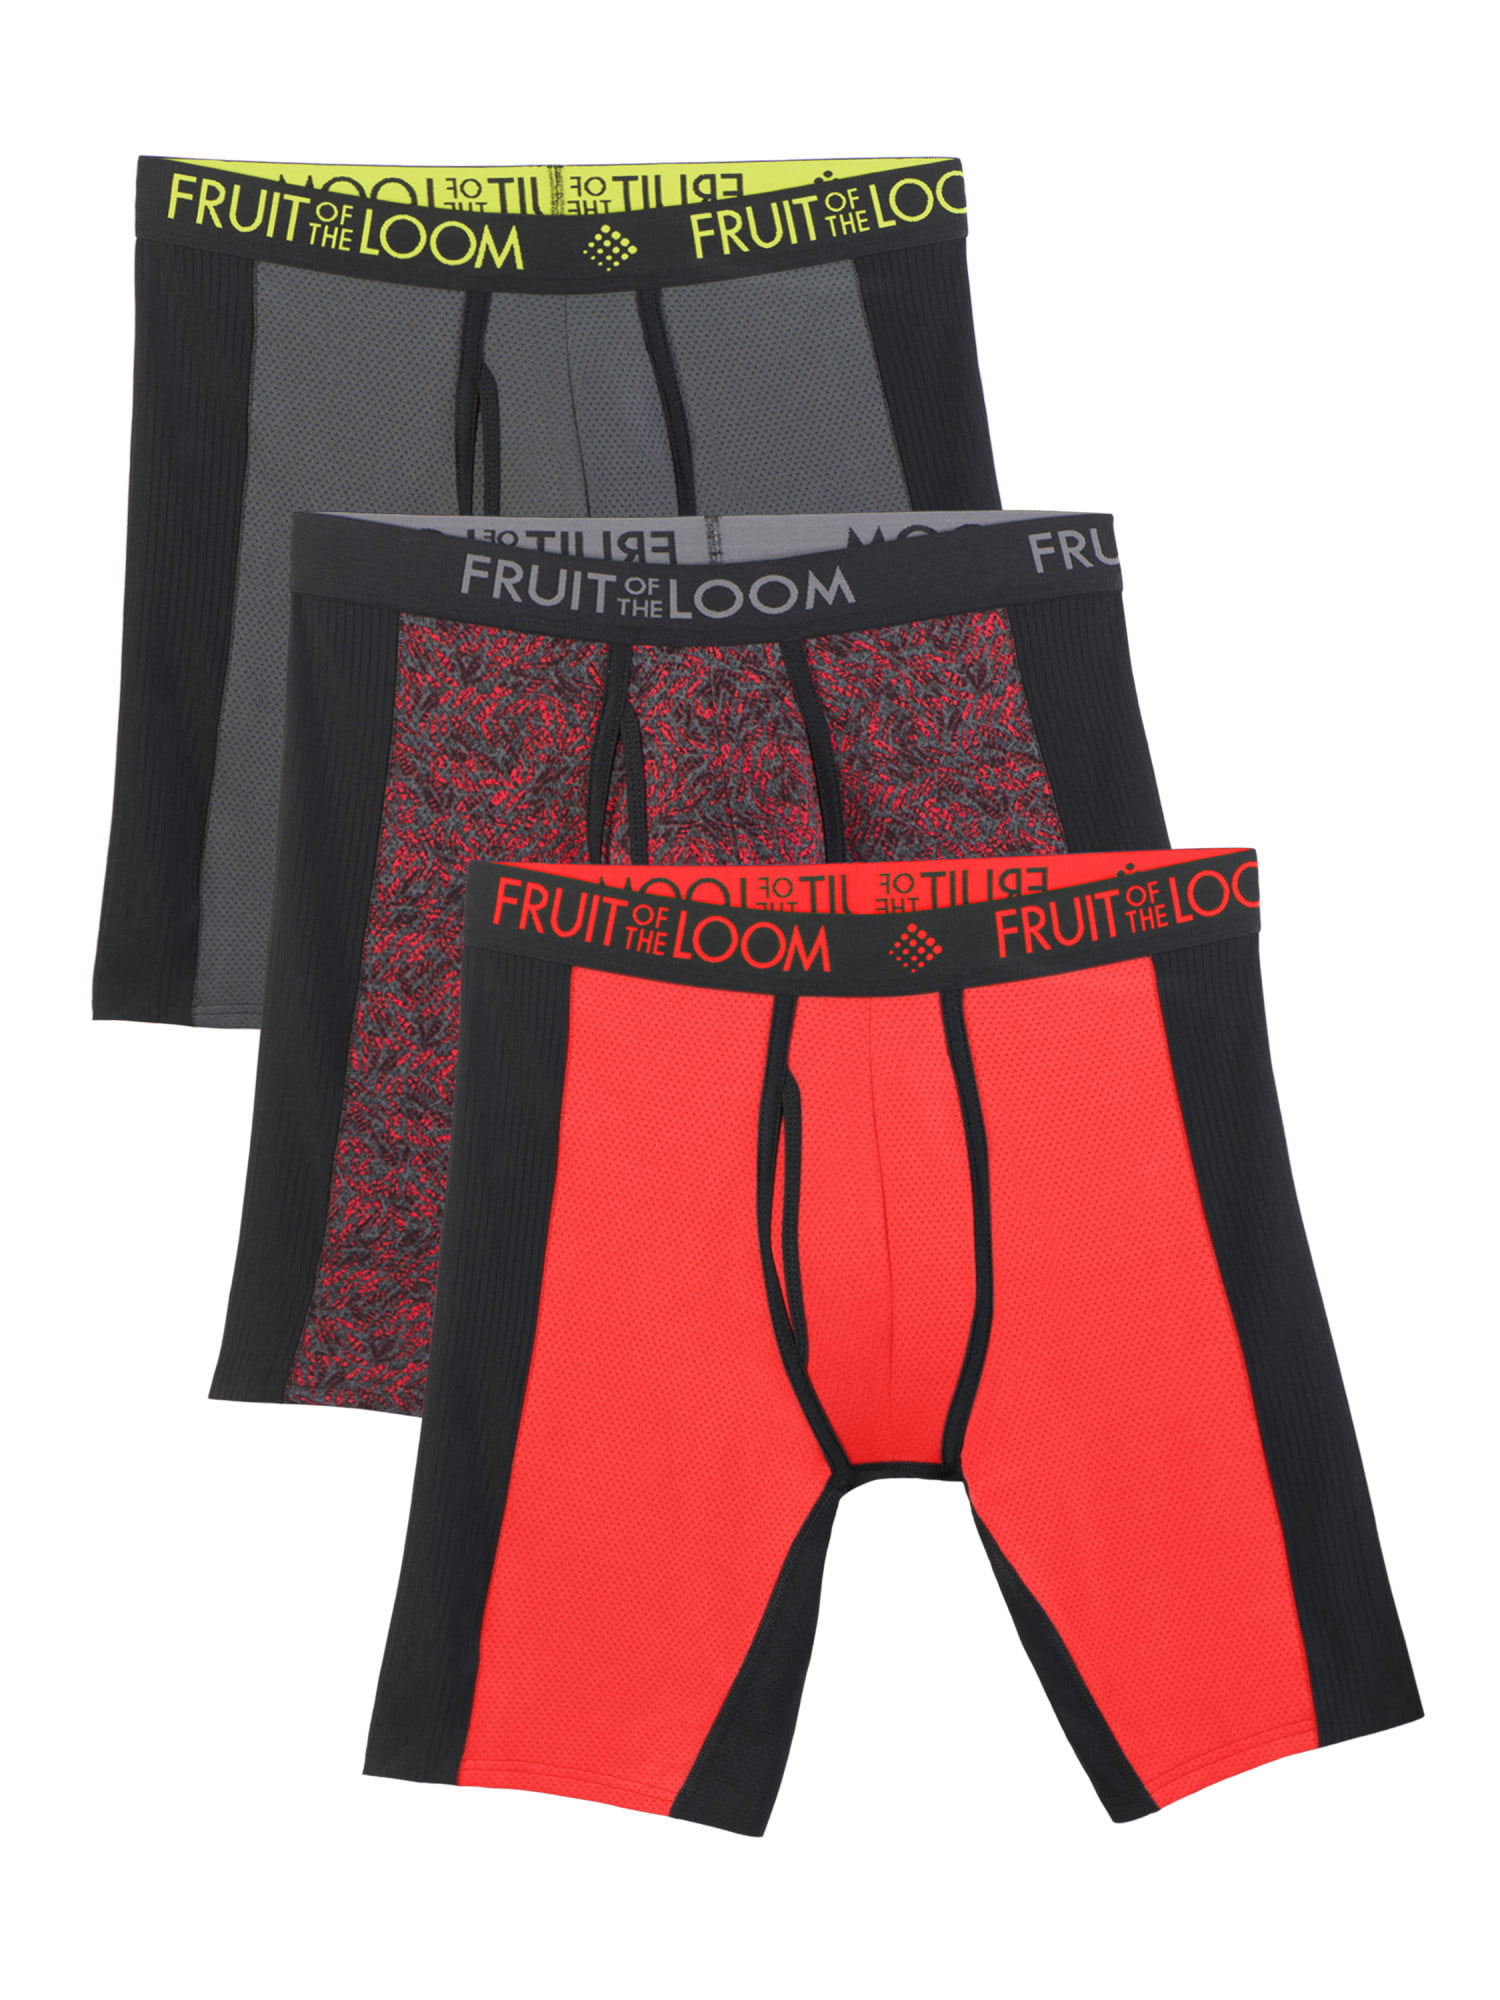 Men's Novelty Boxer Briefs Breathable Underwear Stretchy Underpants Shorts S-XL